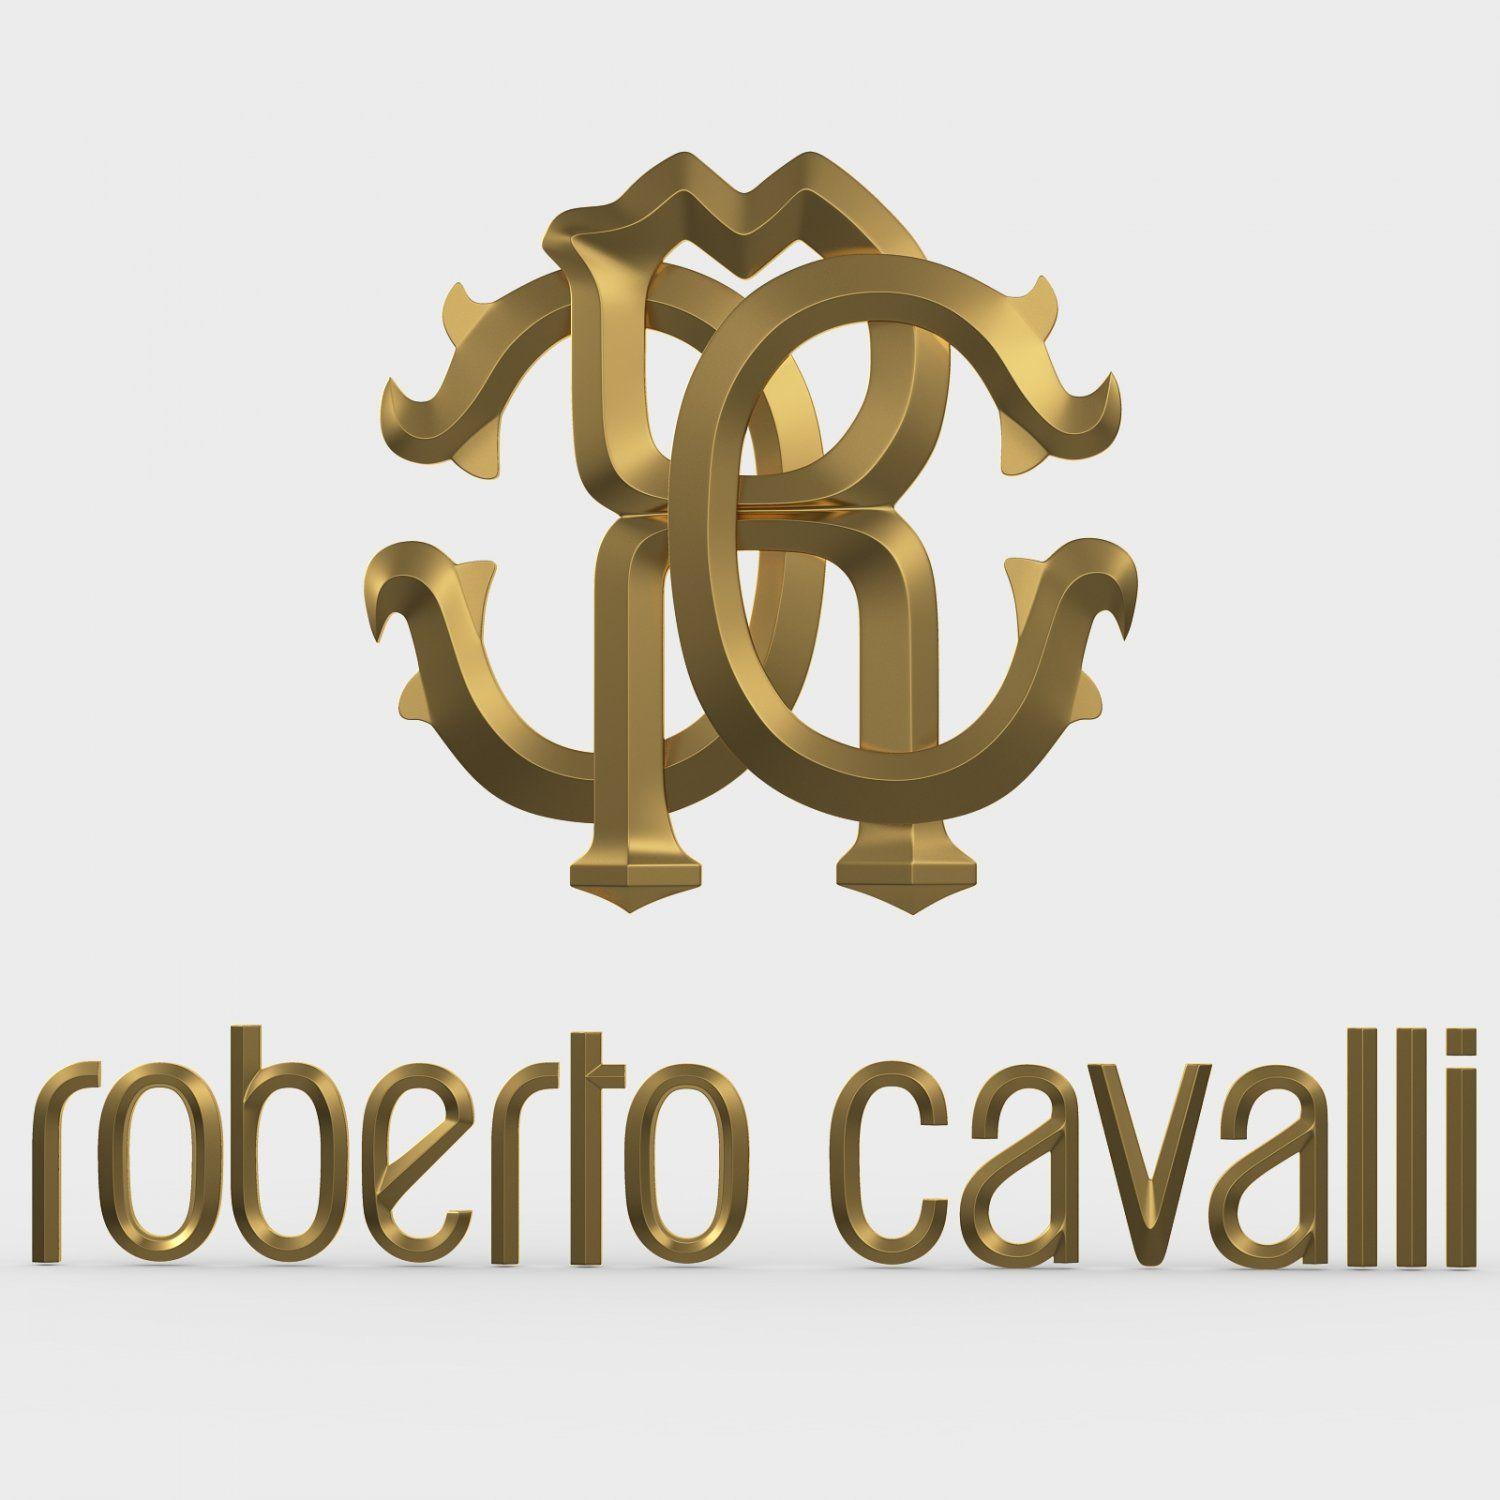 Roberto Cavalli Logo - LogoDix